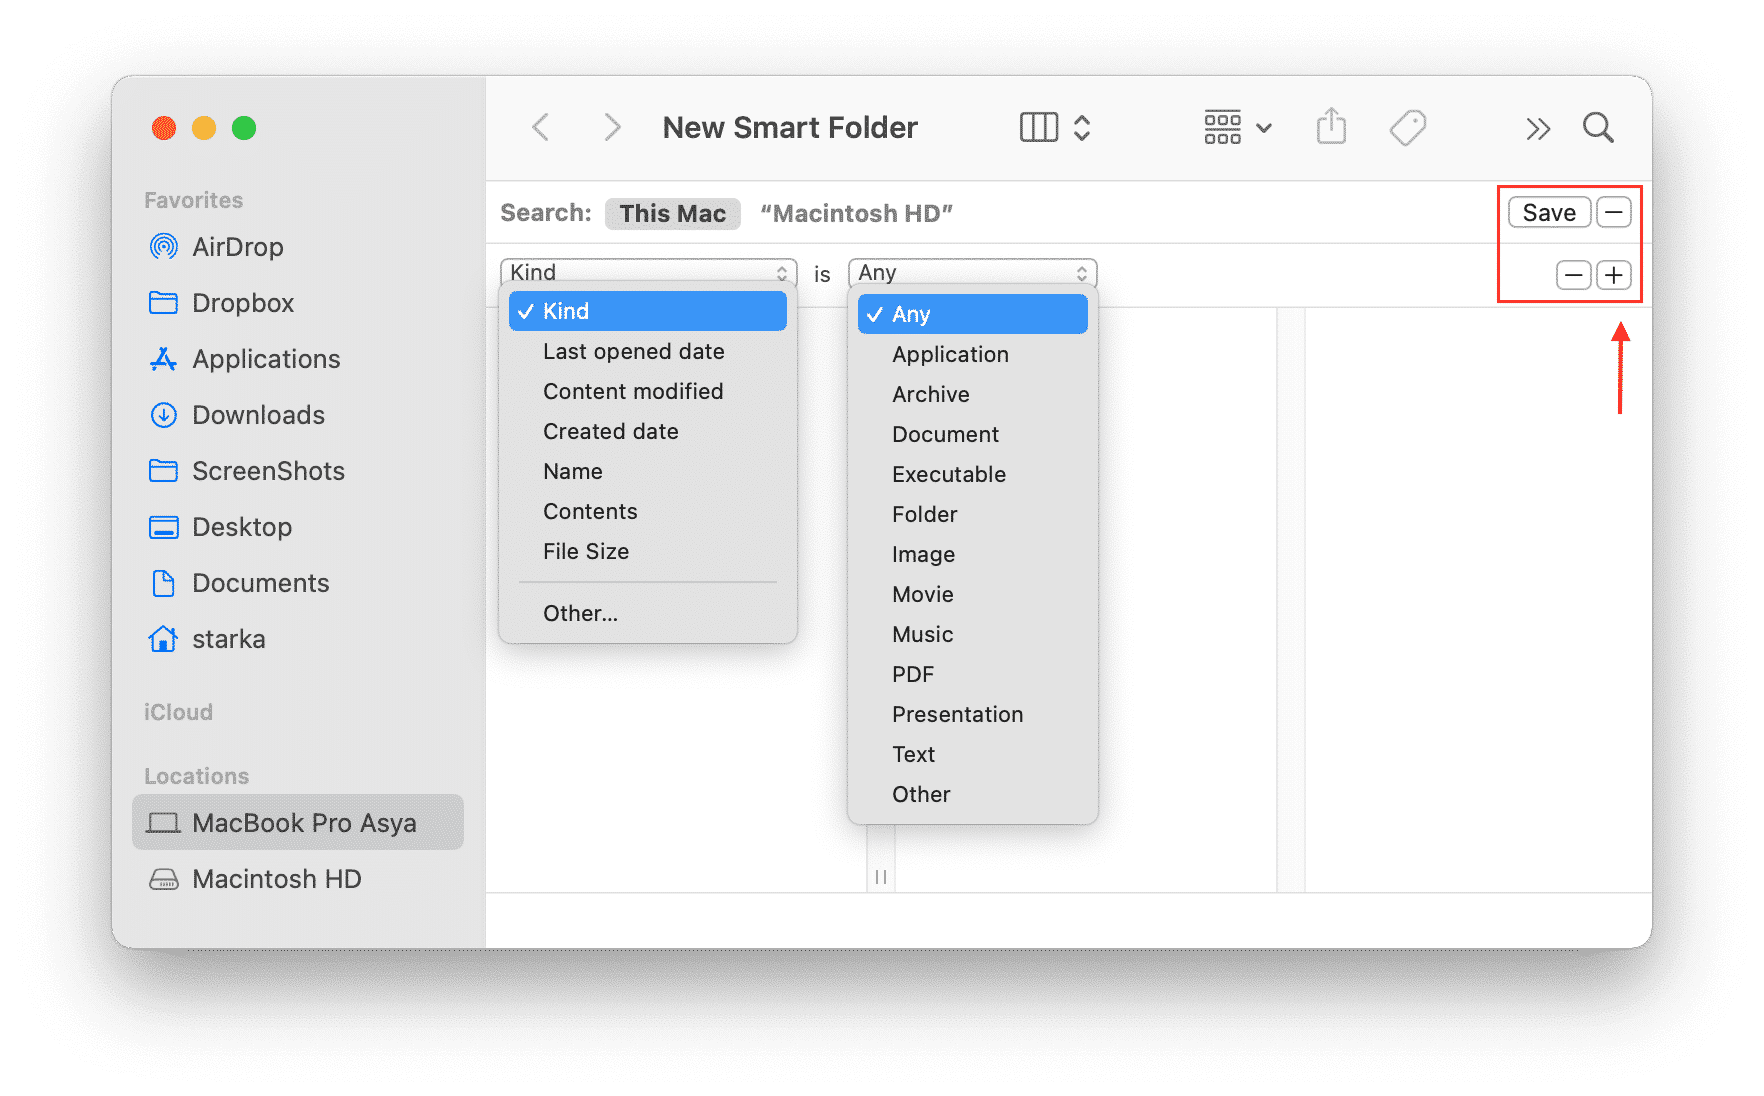 Smart Folder in Finder showing filters drop menus